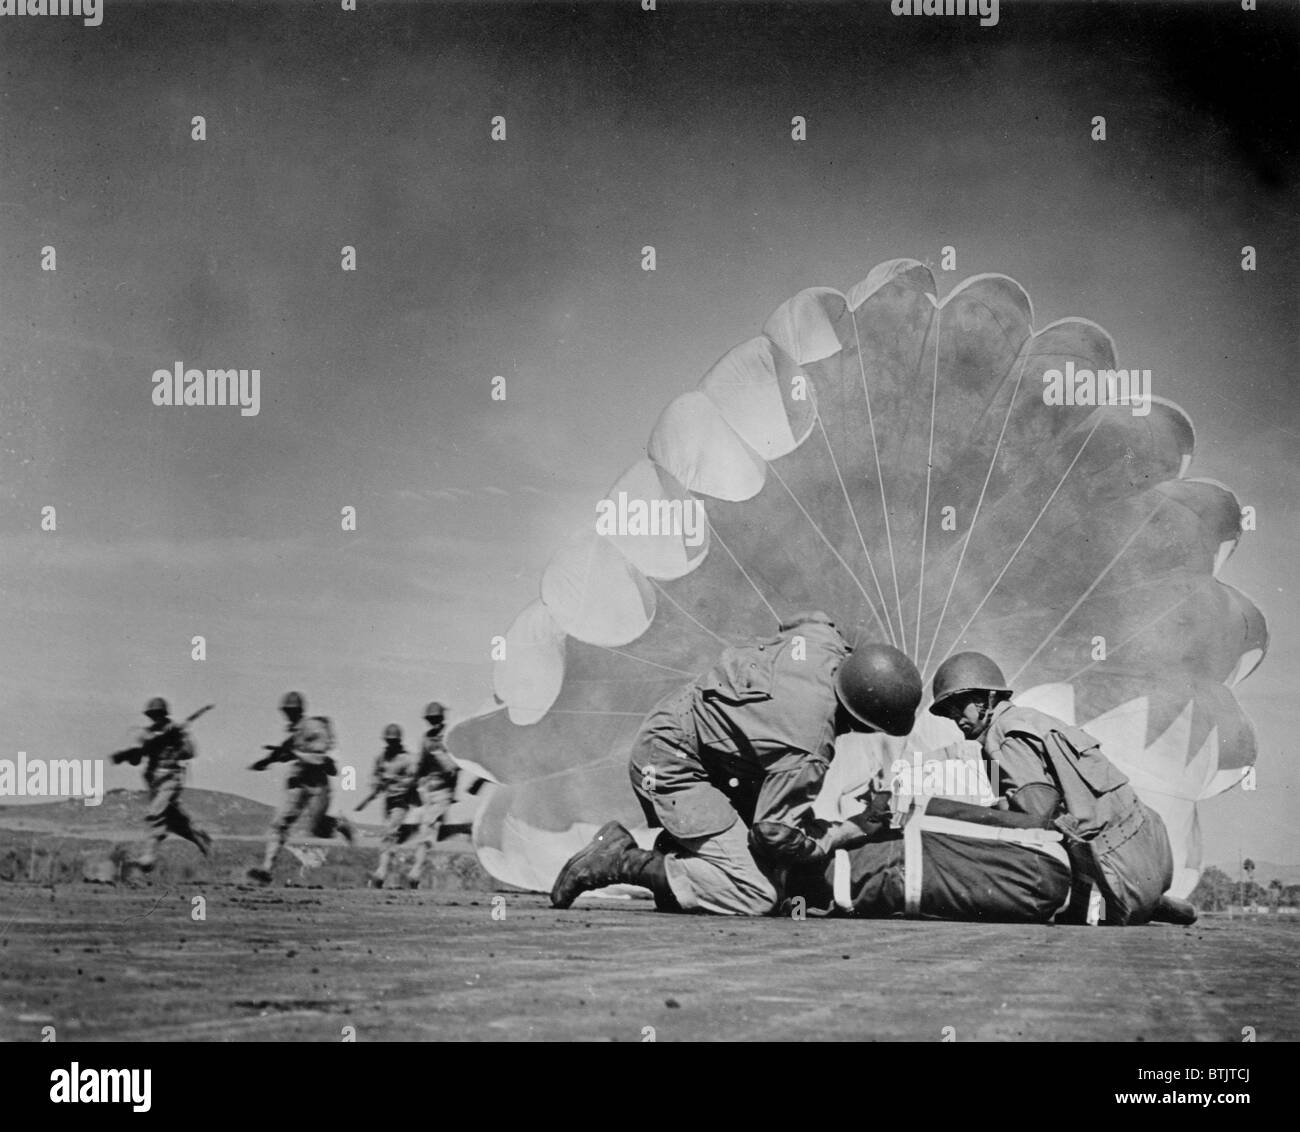 World War II, U.S. paratroopers in action, circa 1940-1946. Stock Photo